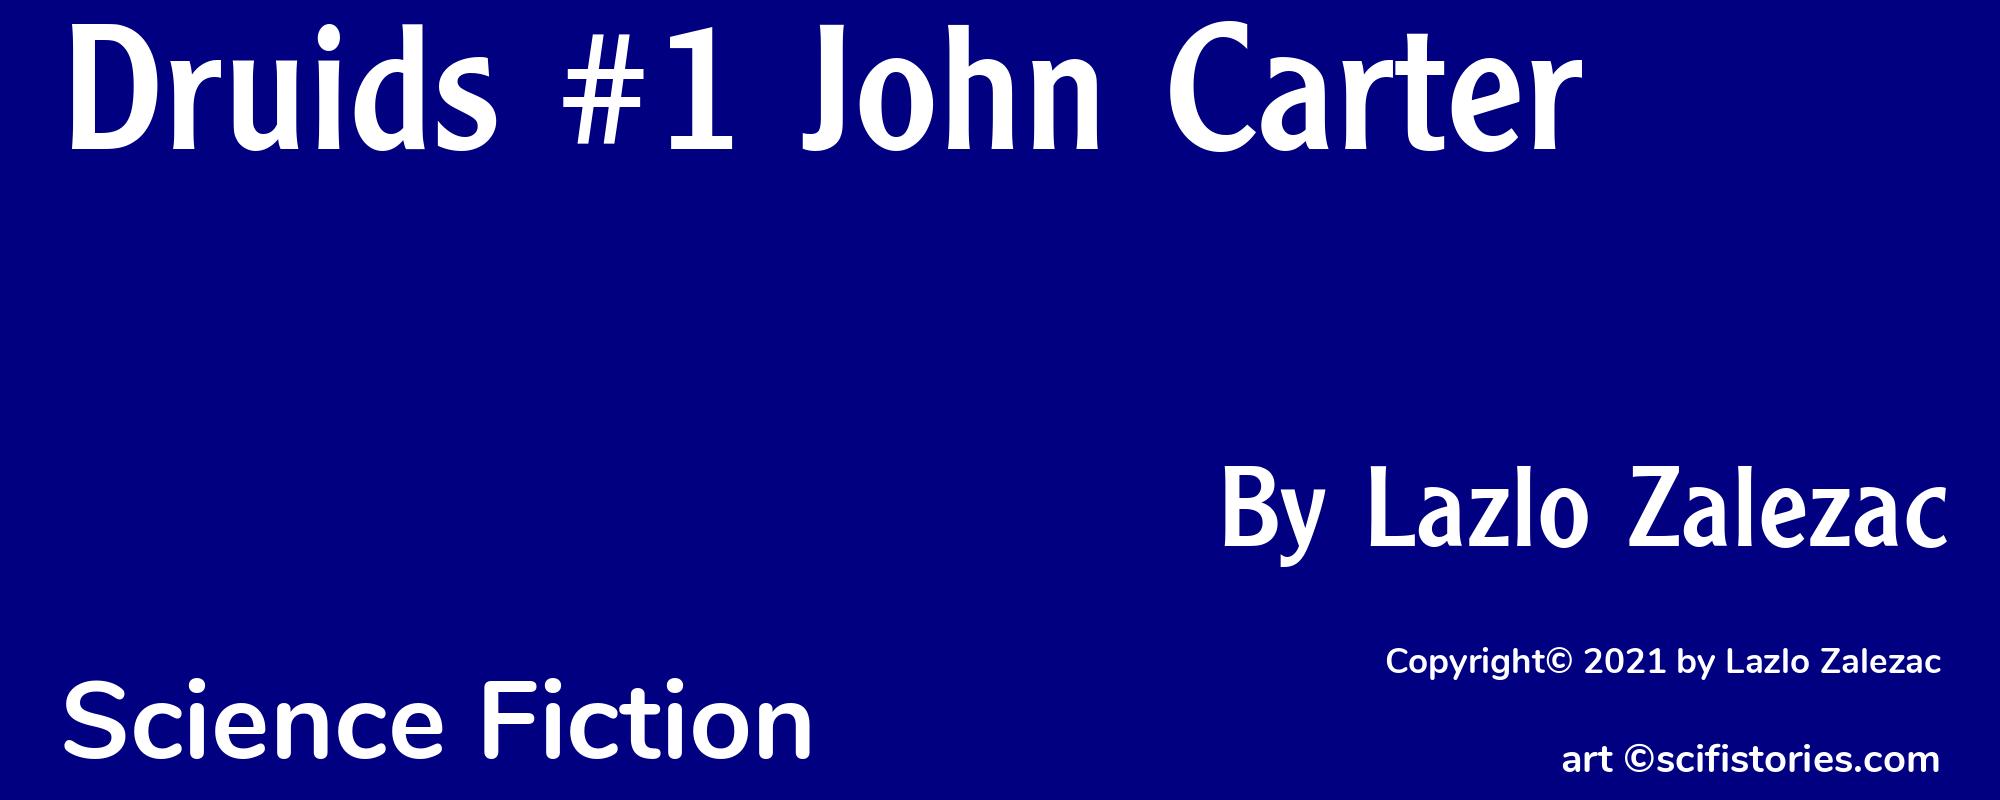 Druids #1 John Carter - Cover